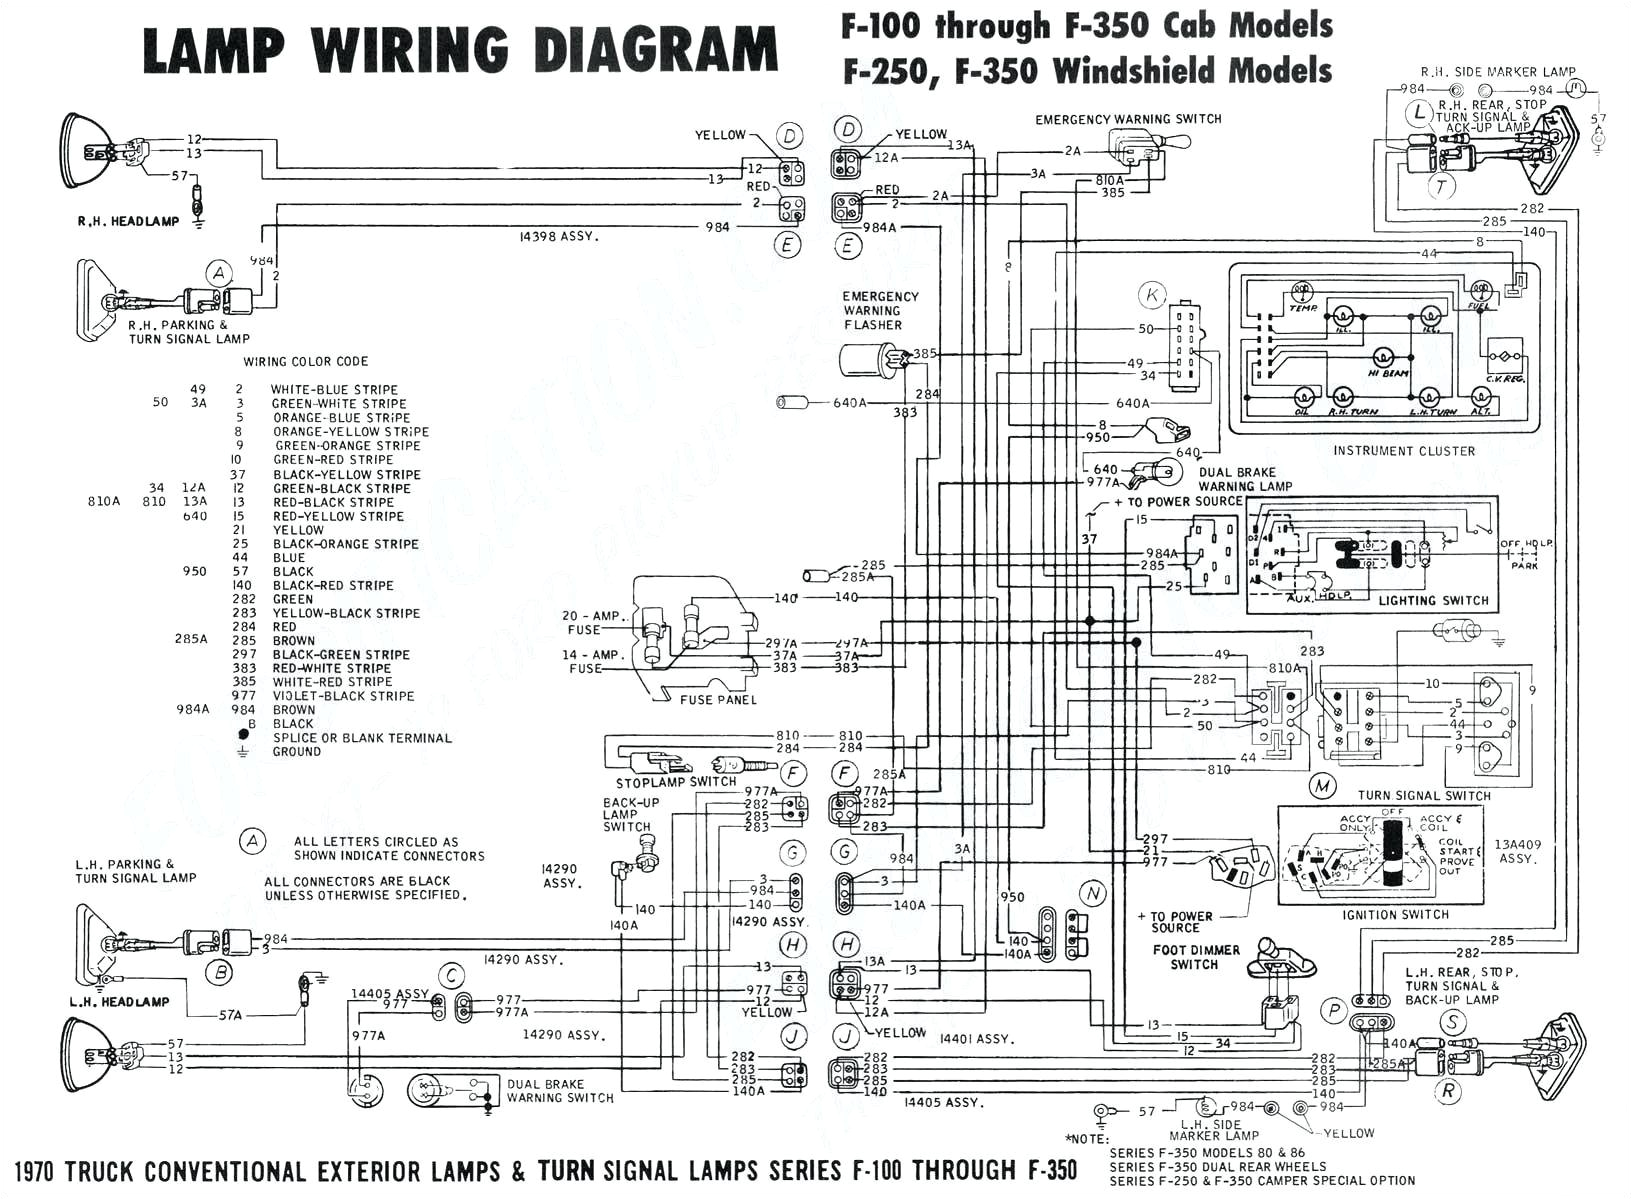 1951 ford turn signal wiring diagram wiring schematic 2019 1951 ford turn signal wiring diagram free download